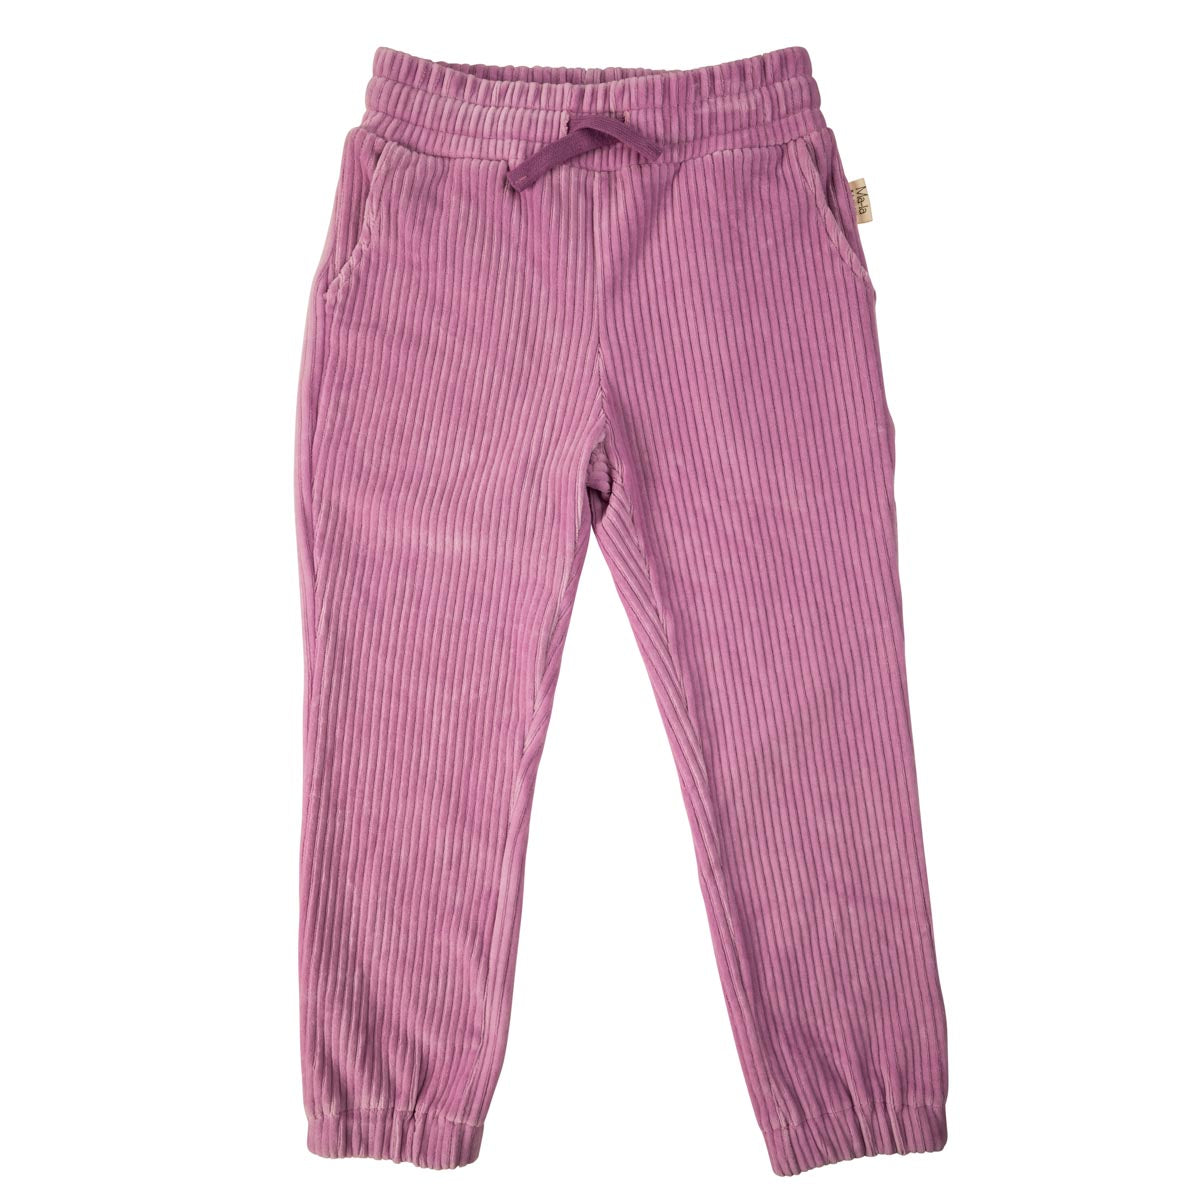 Merri Trousers, light purple